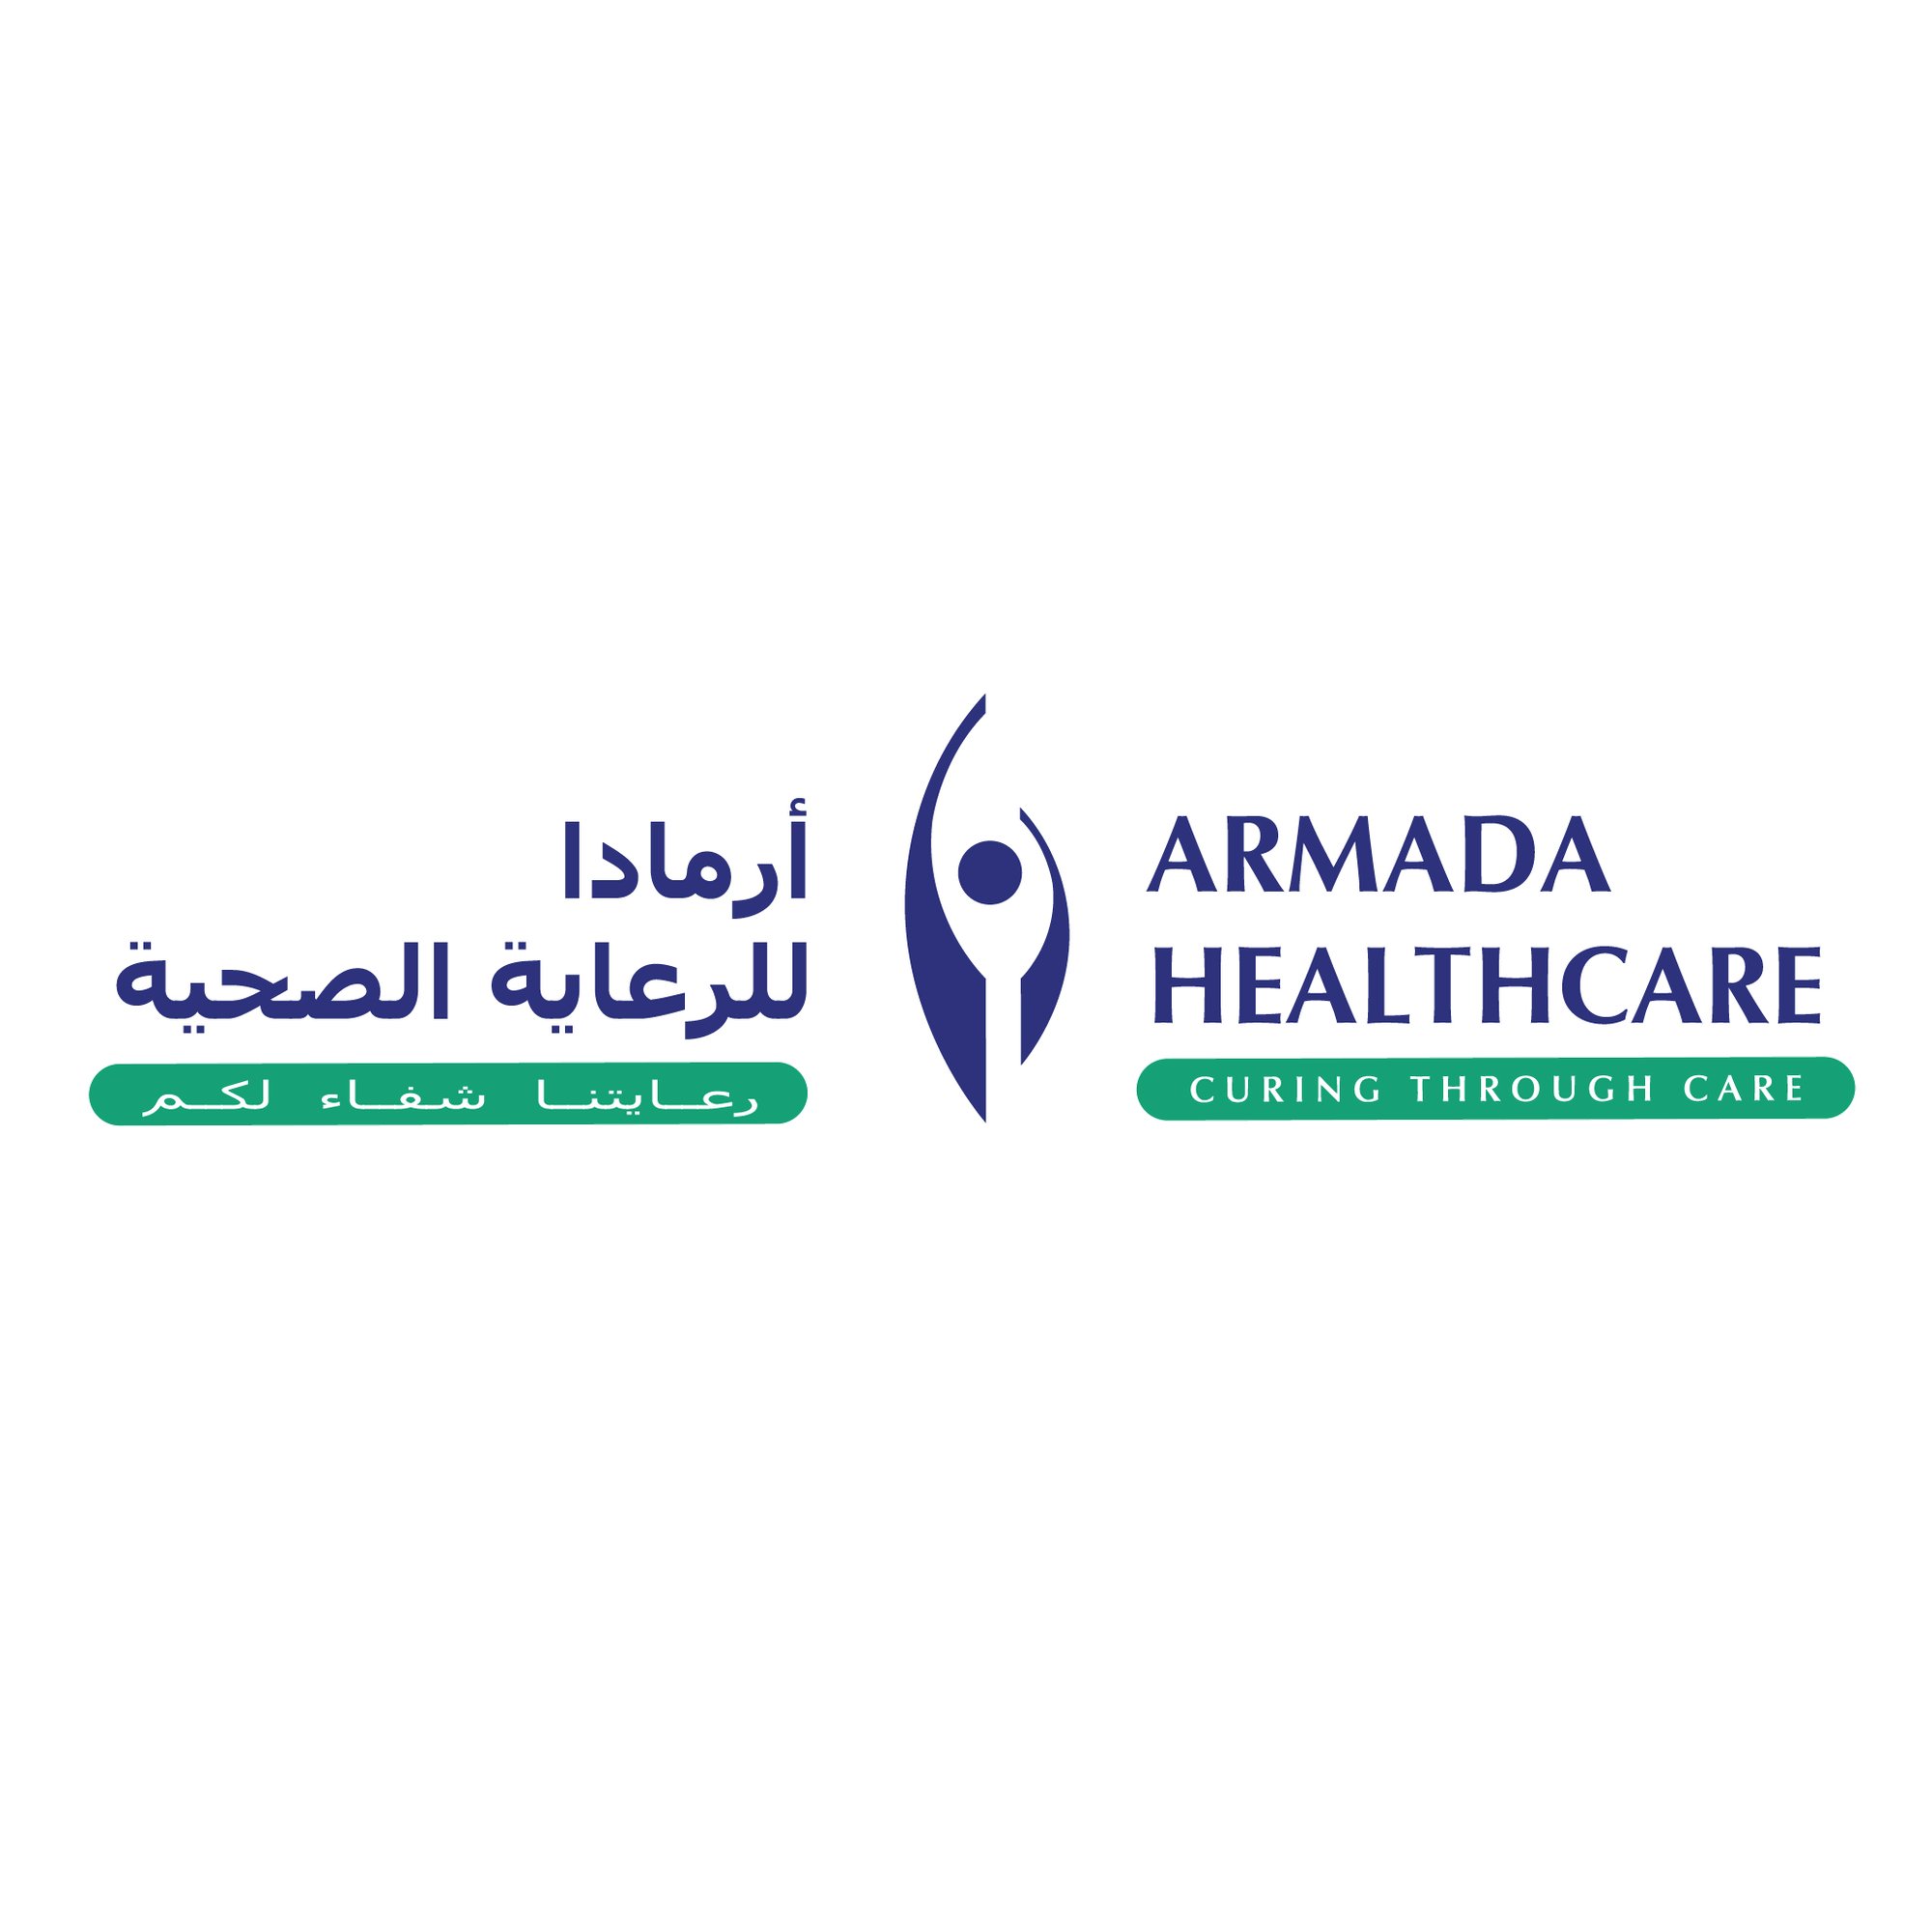 Armada Healthcare